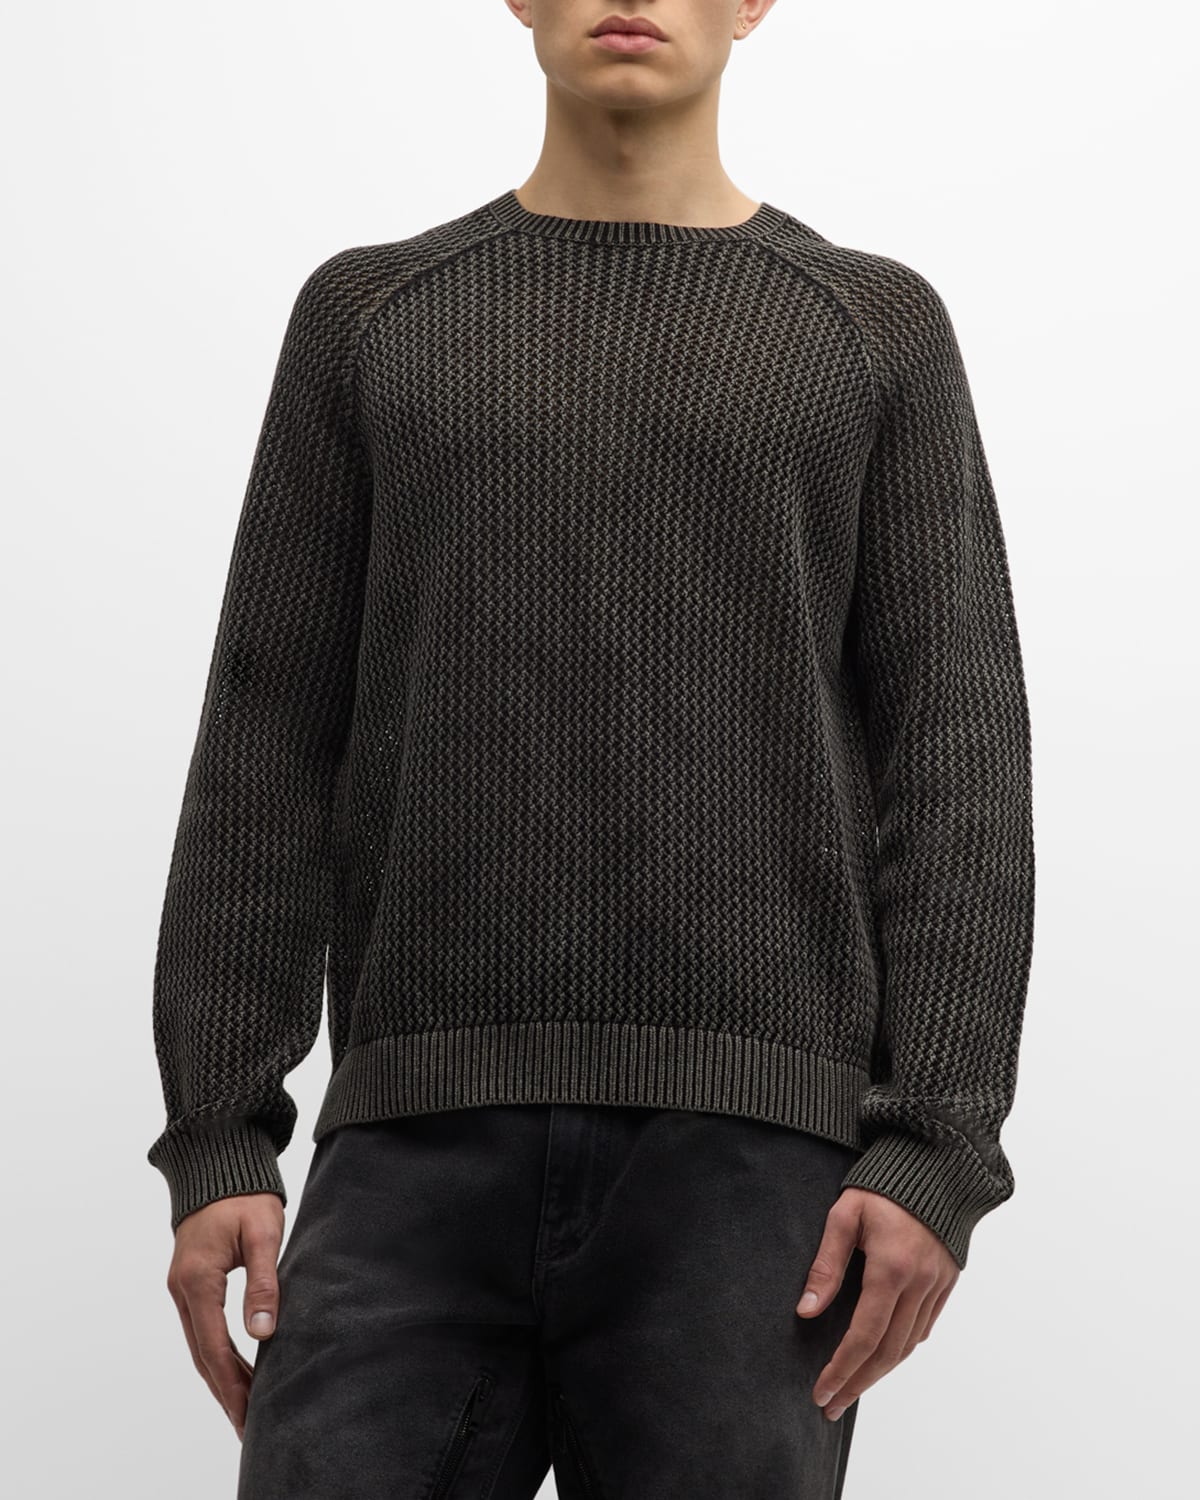 Men's Loose-Gauge Raglan Sweater